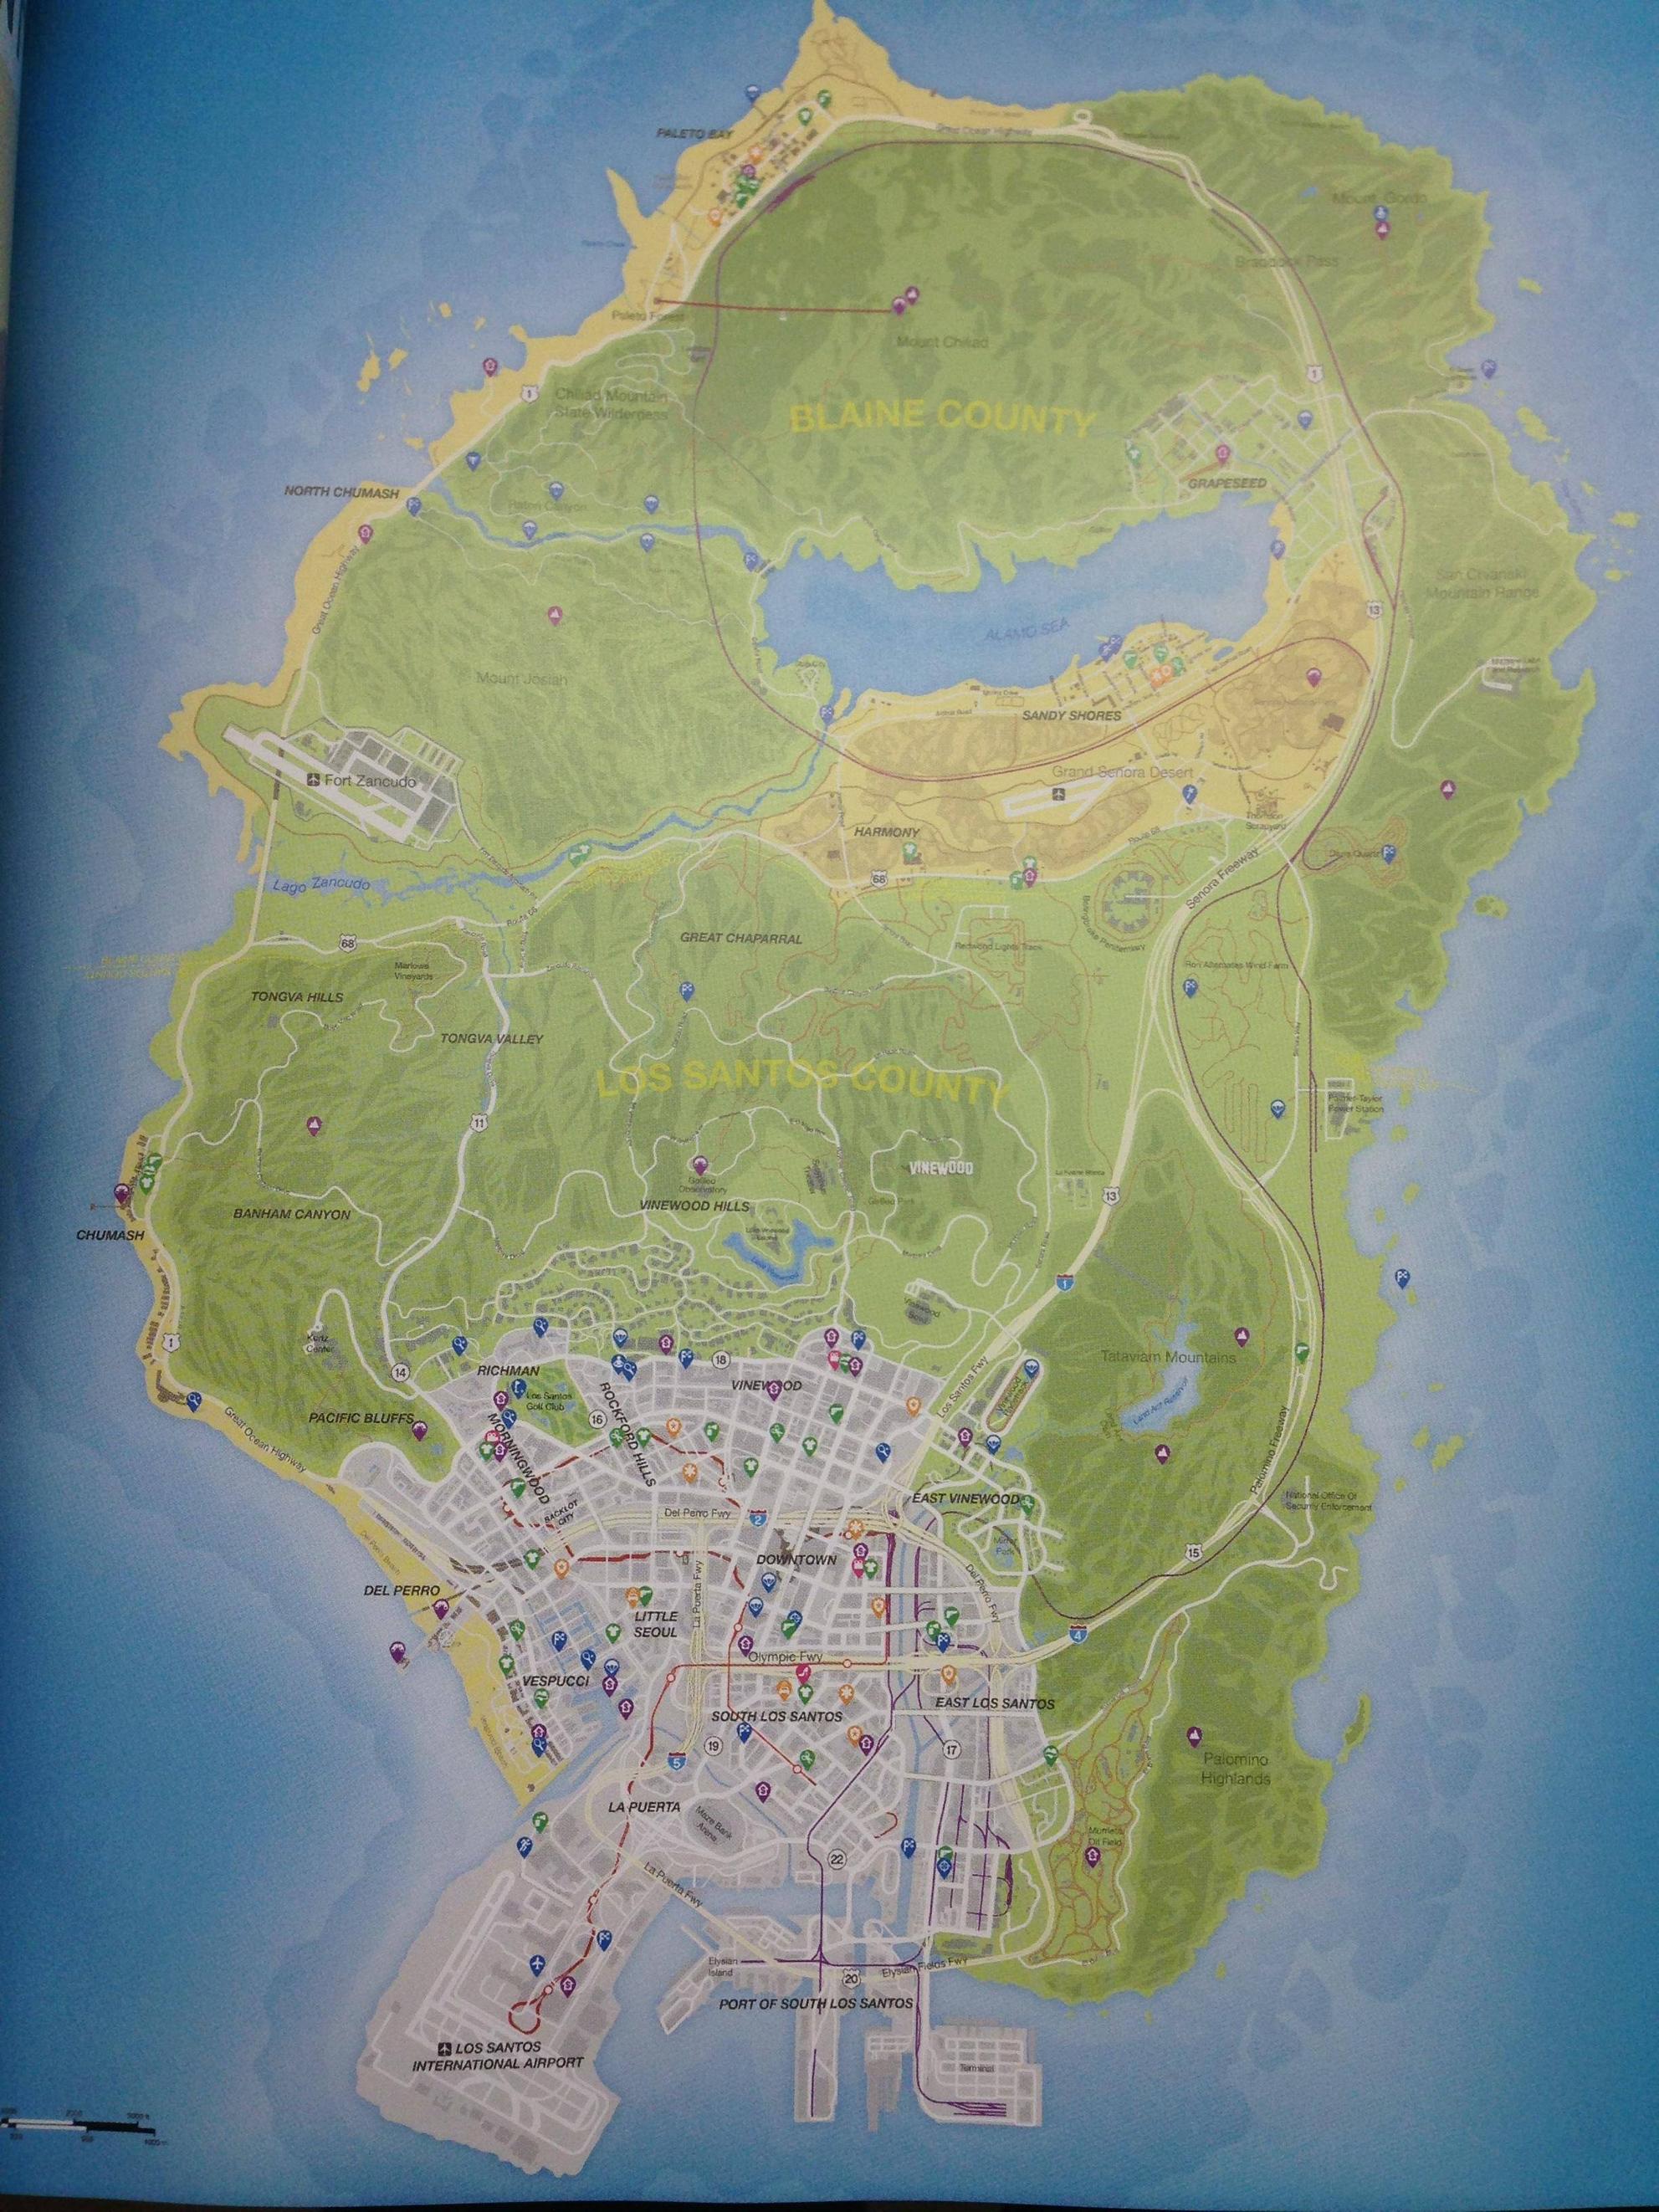 Where is Los Santos located in GTA 5?